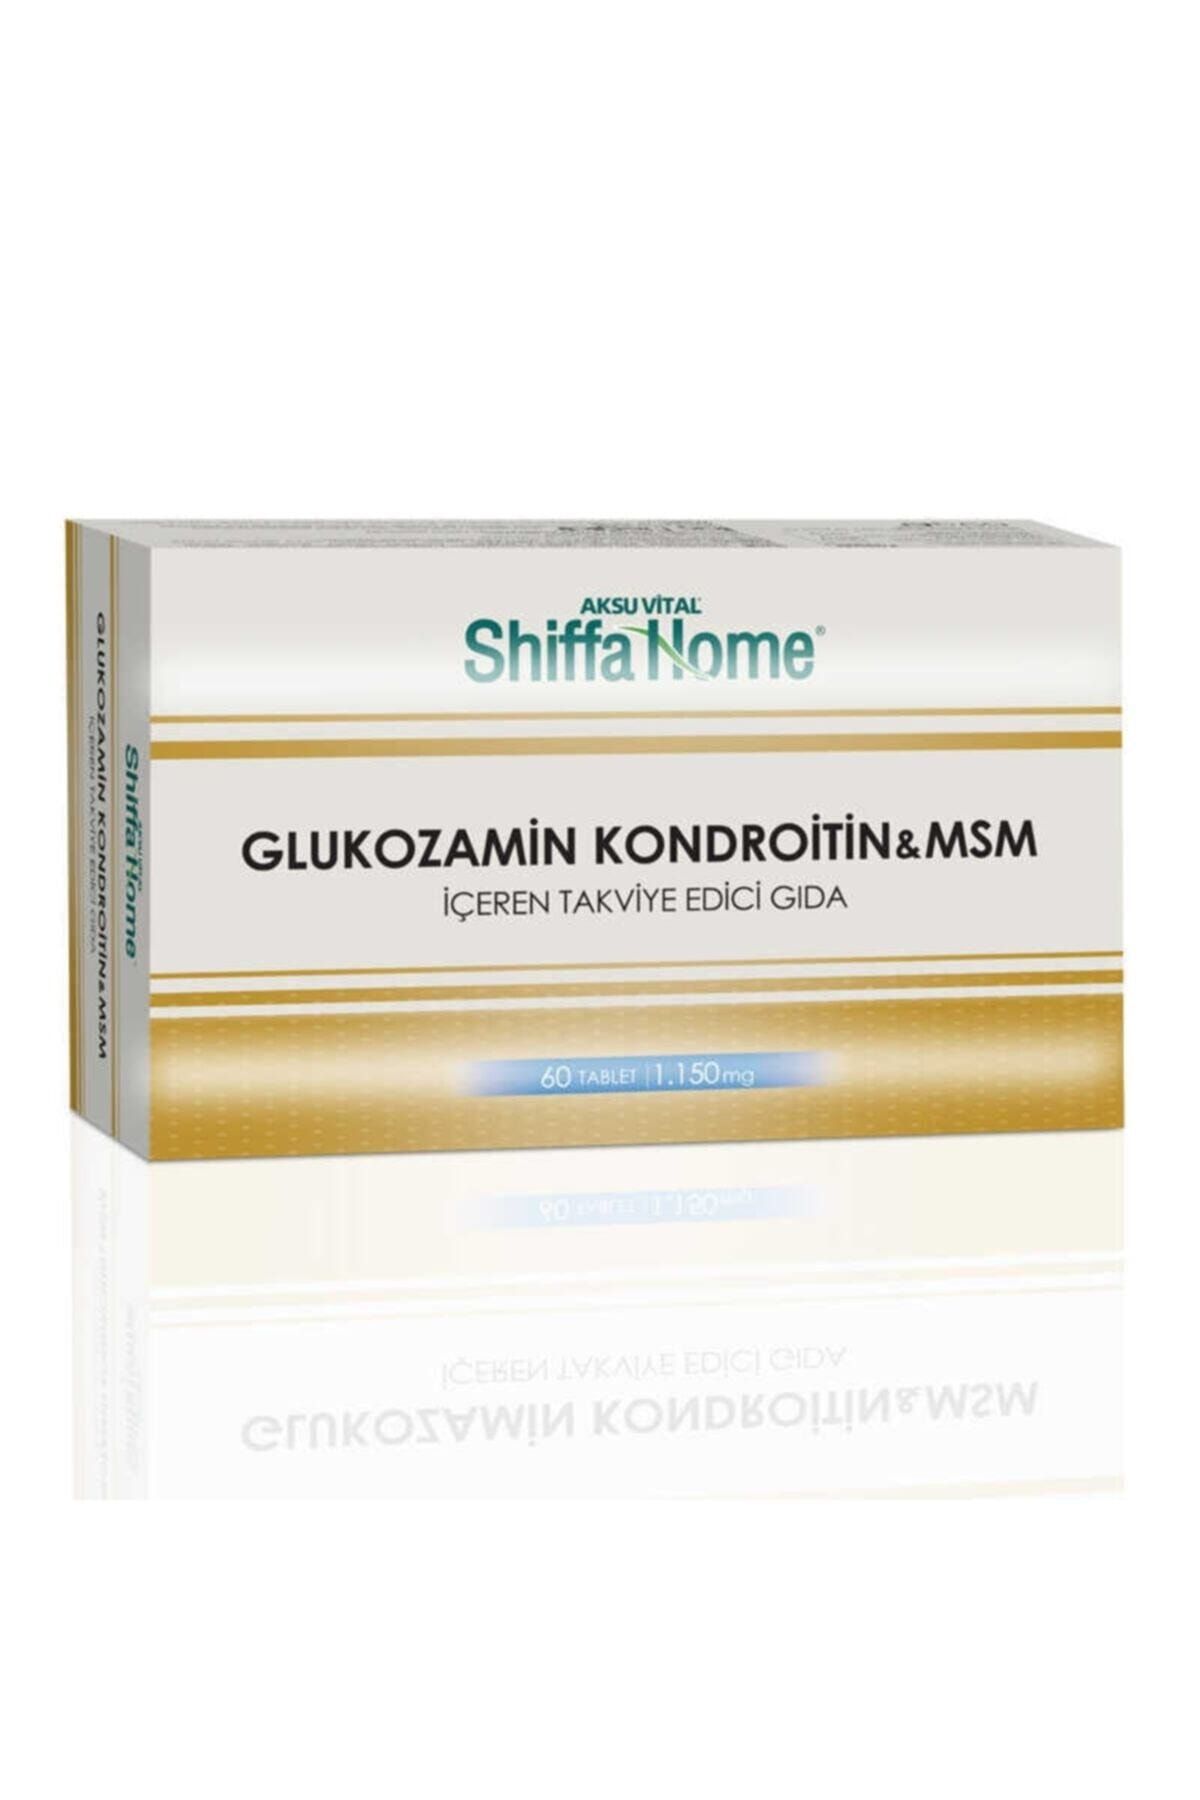 Aksu Vital Glucosamine Chondroitine Msm Tablet 1150mg*60 Adet